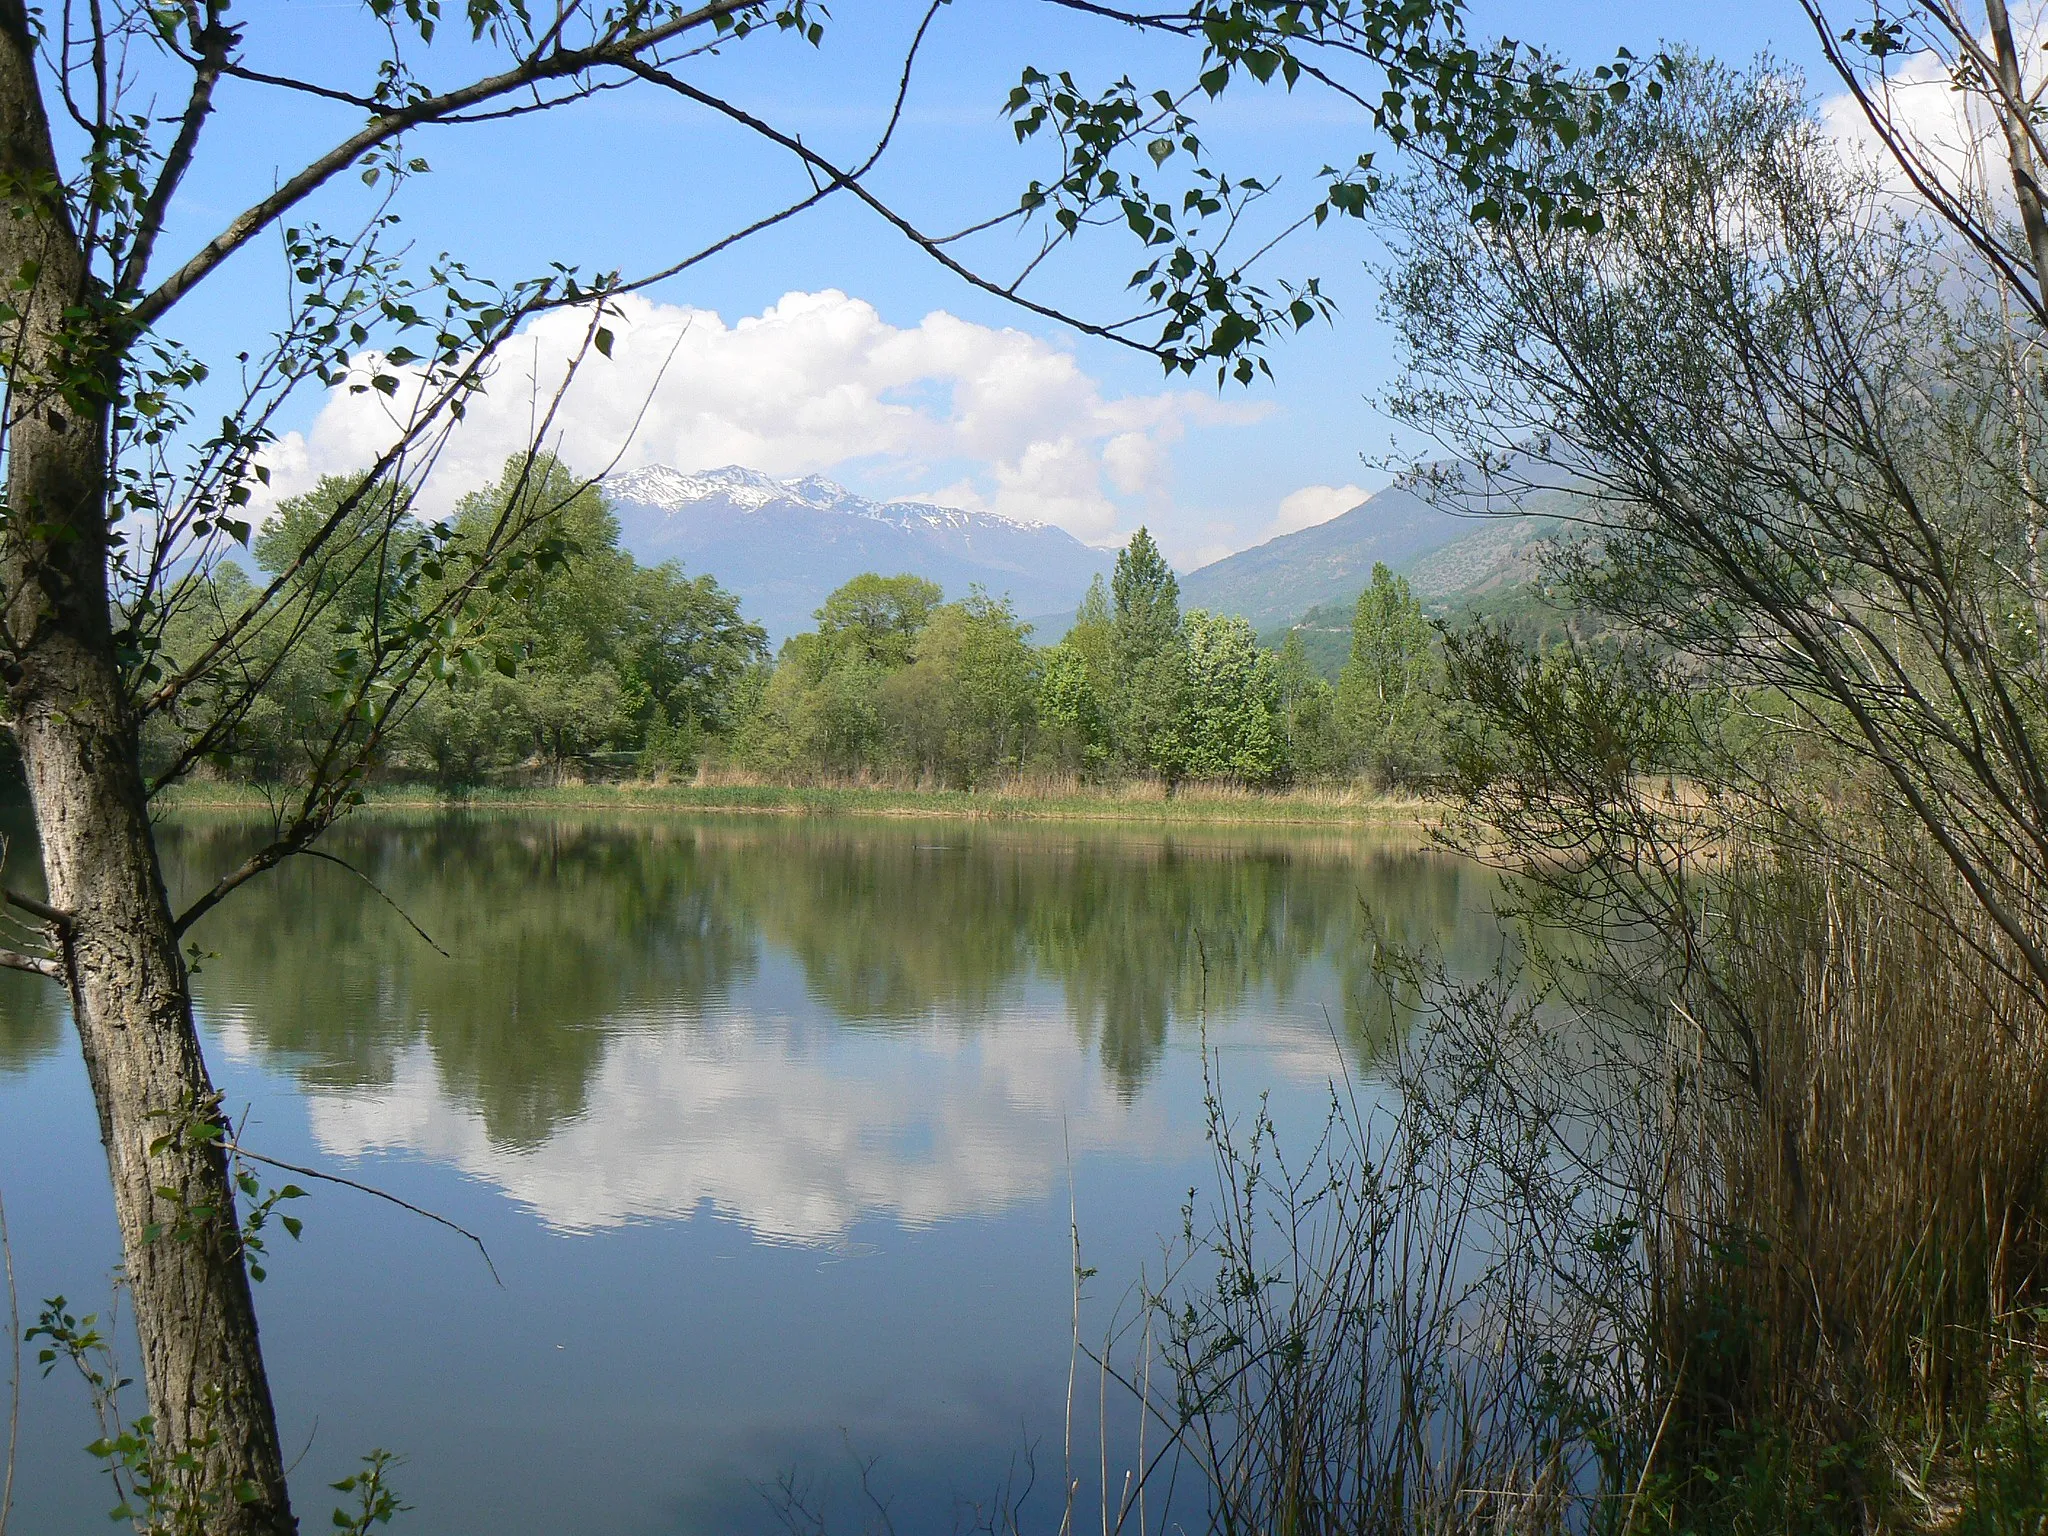 Photo showing: Riserva naturale Les Îles nei comuni di  Brissogne, Nus, Quart, Saint-Marcel. Valle d'Aosta, Italia.